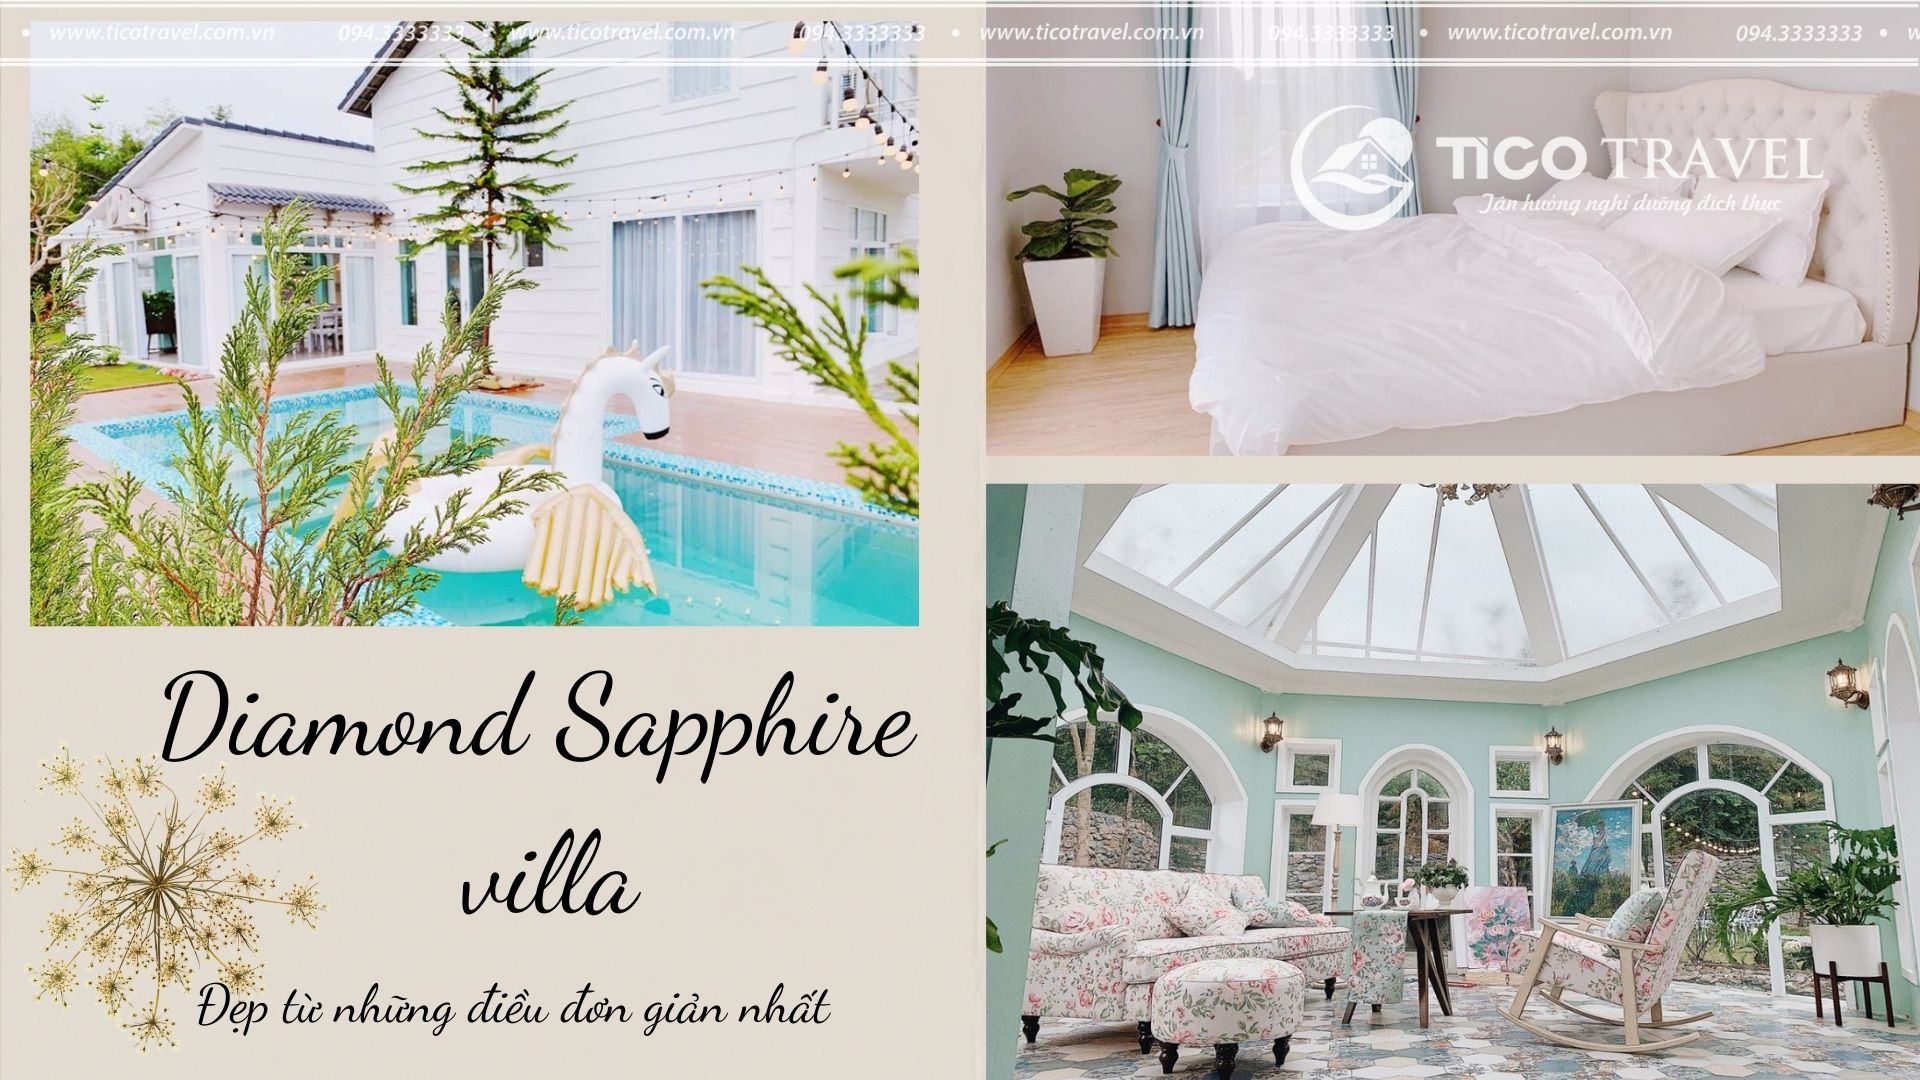 Diamond Sapphire villa